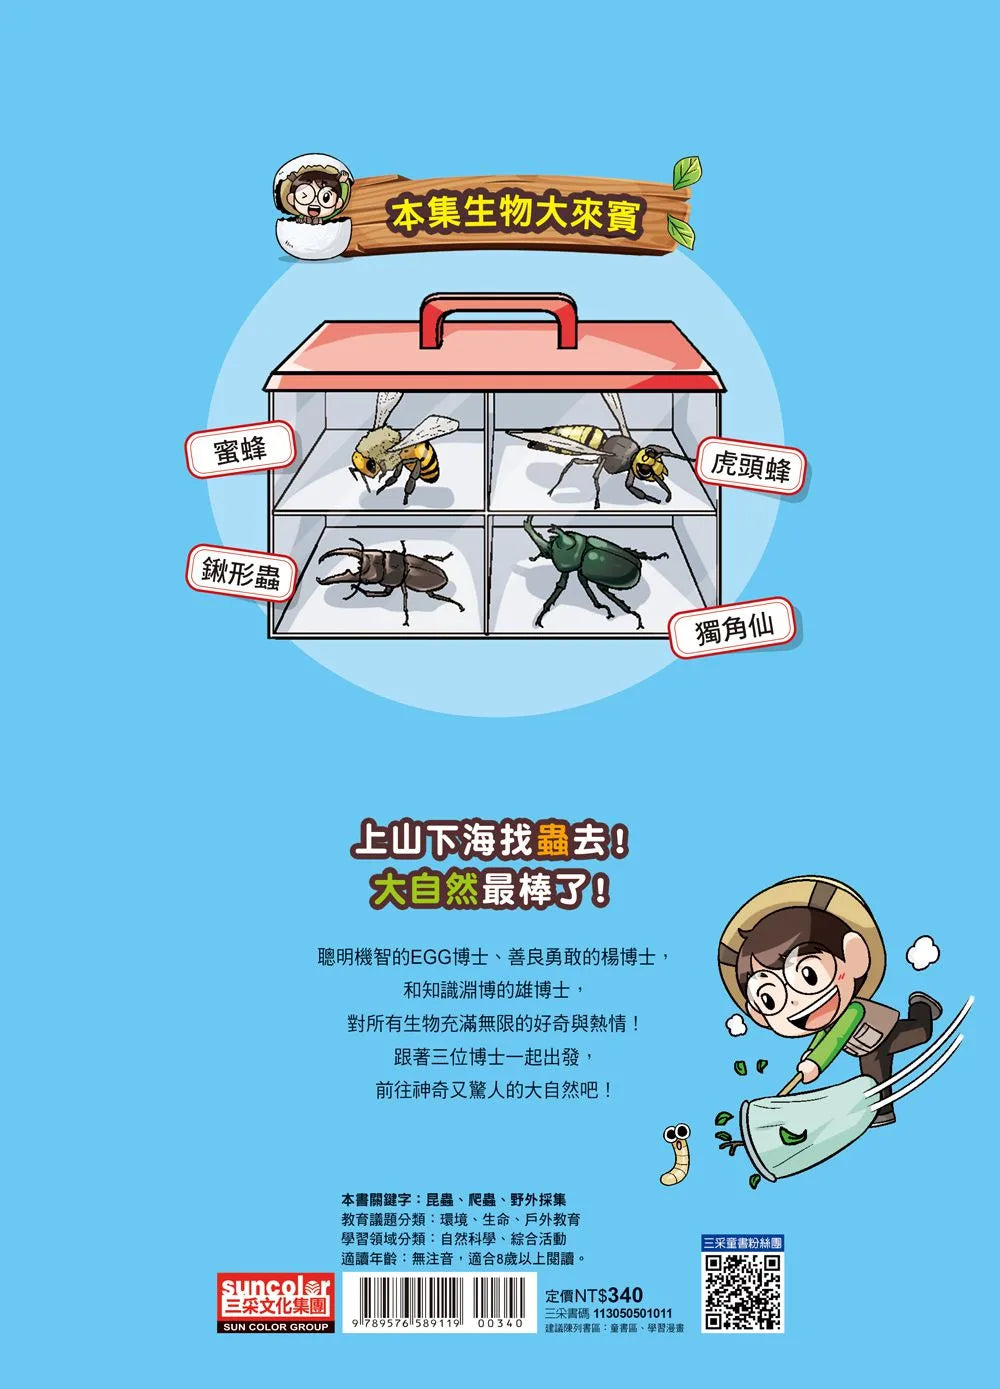 Wild Life Observation Manga: Dr. Bug 01 - Hornets and Beetles  • 【野外生物觀察漫畫】蟲蟲博士1：虎頭蜂&甲蟲